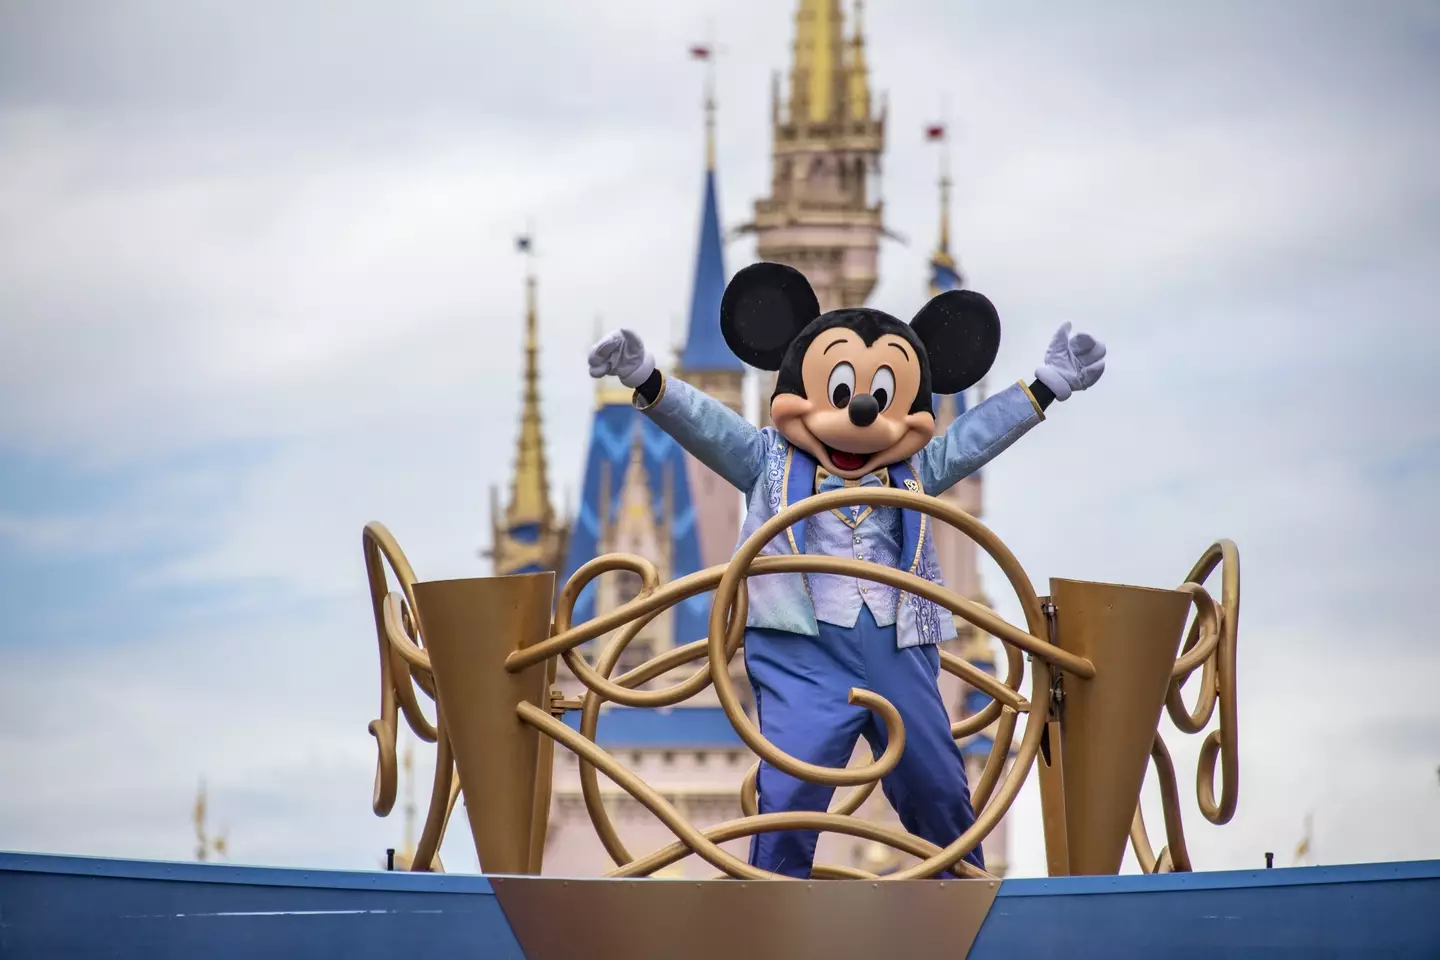 Mickey Mouse at Walt Disney World, Florida (Joseph Prezioso/Anadolu Agency via Getty Images)